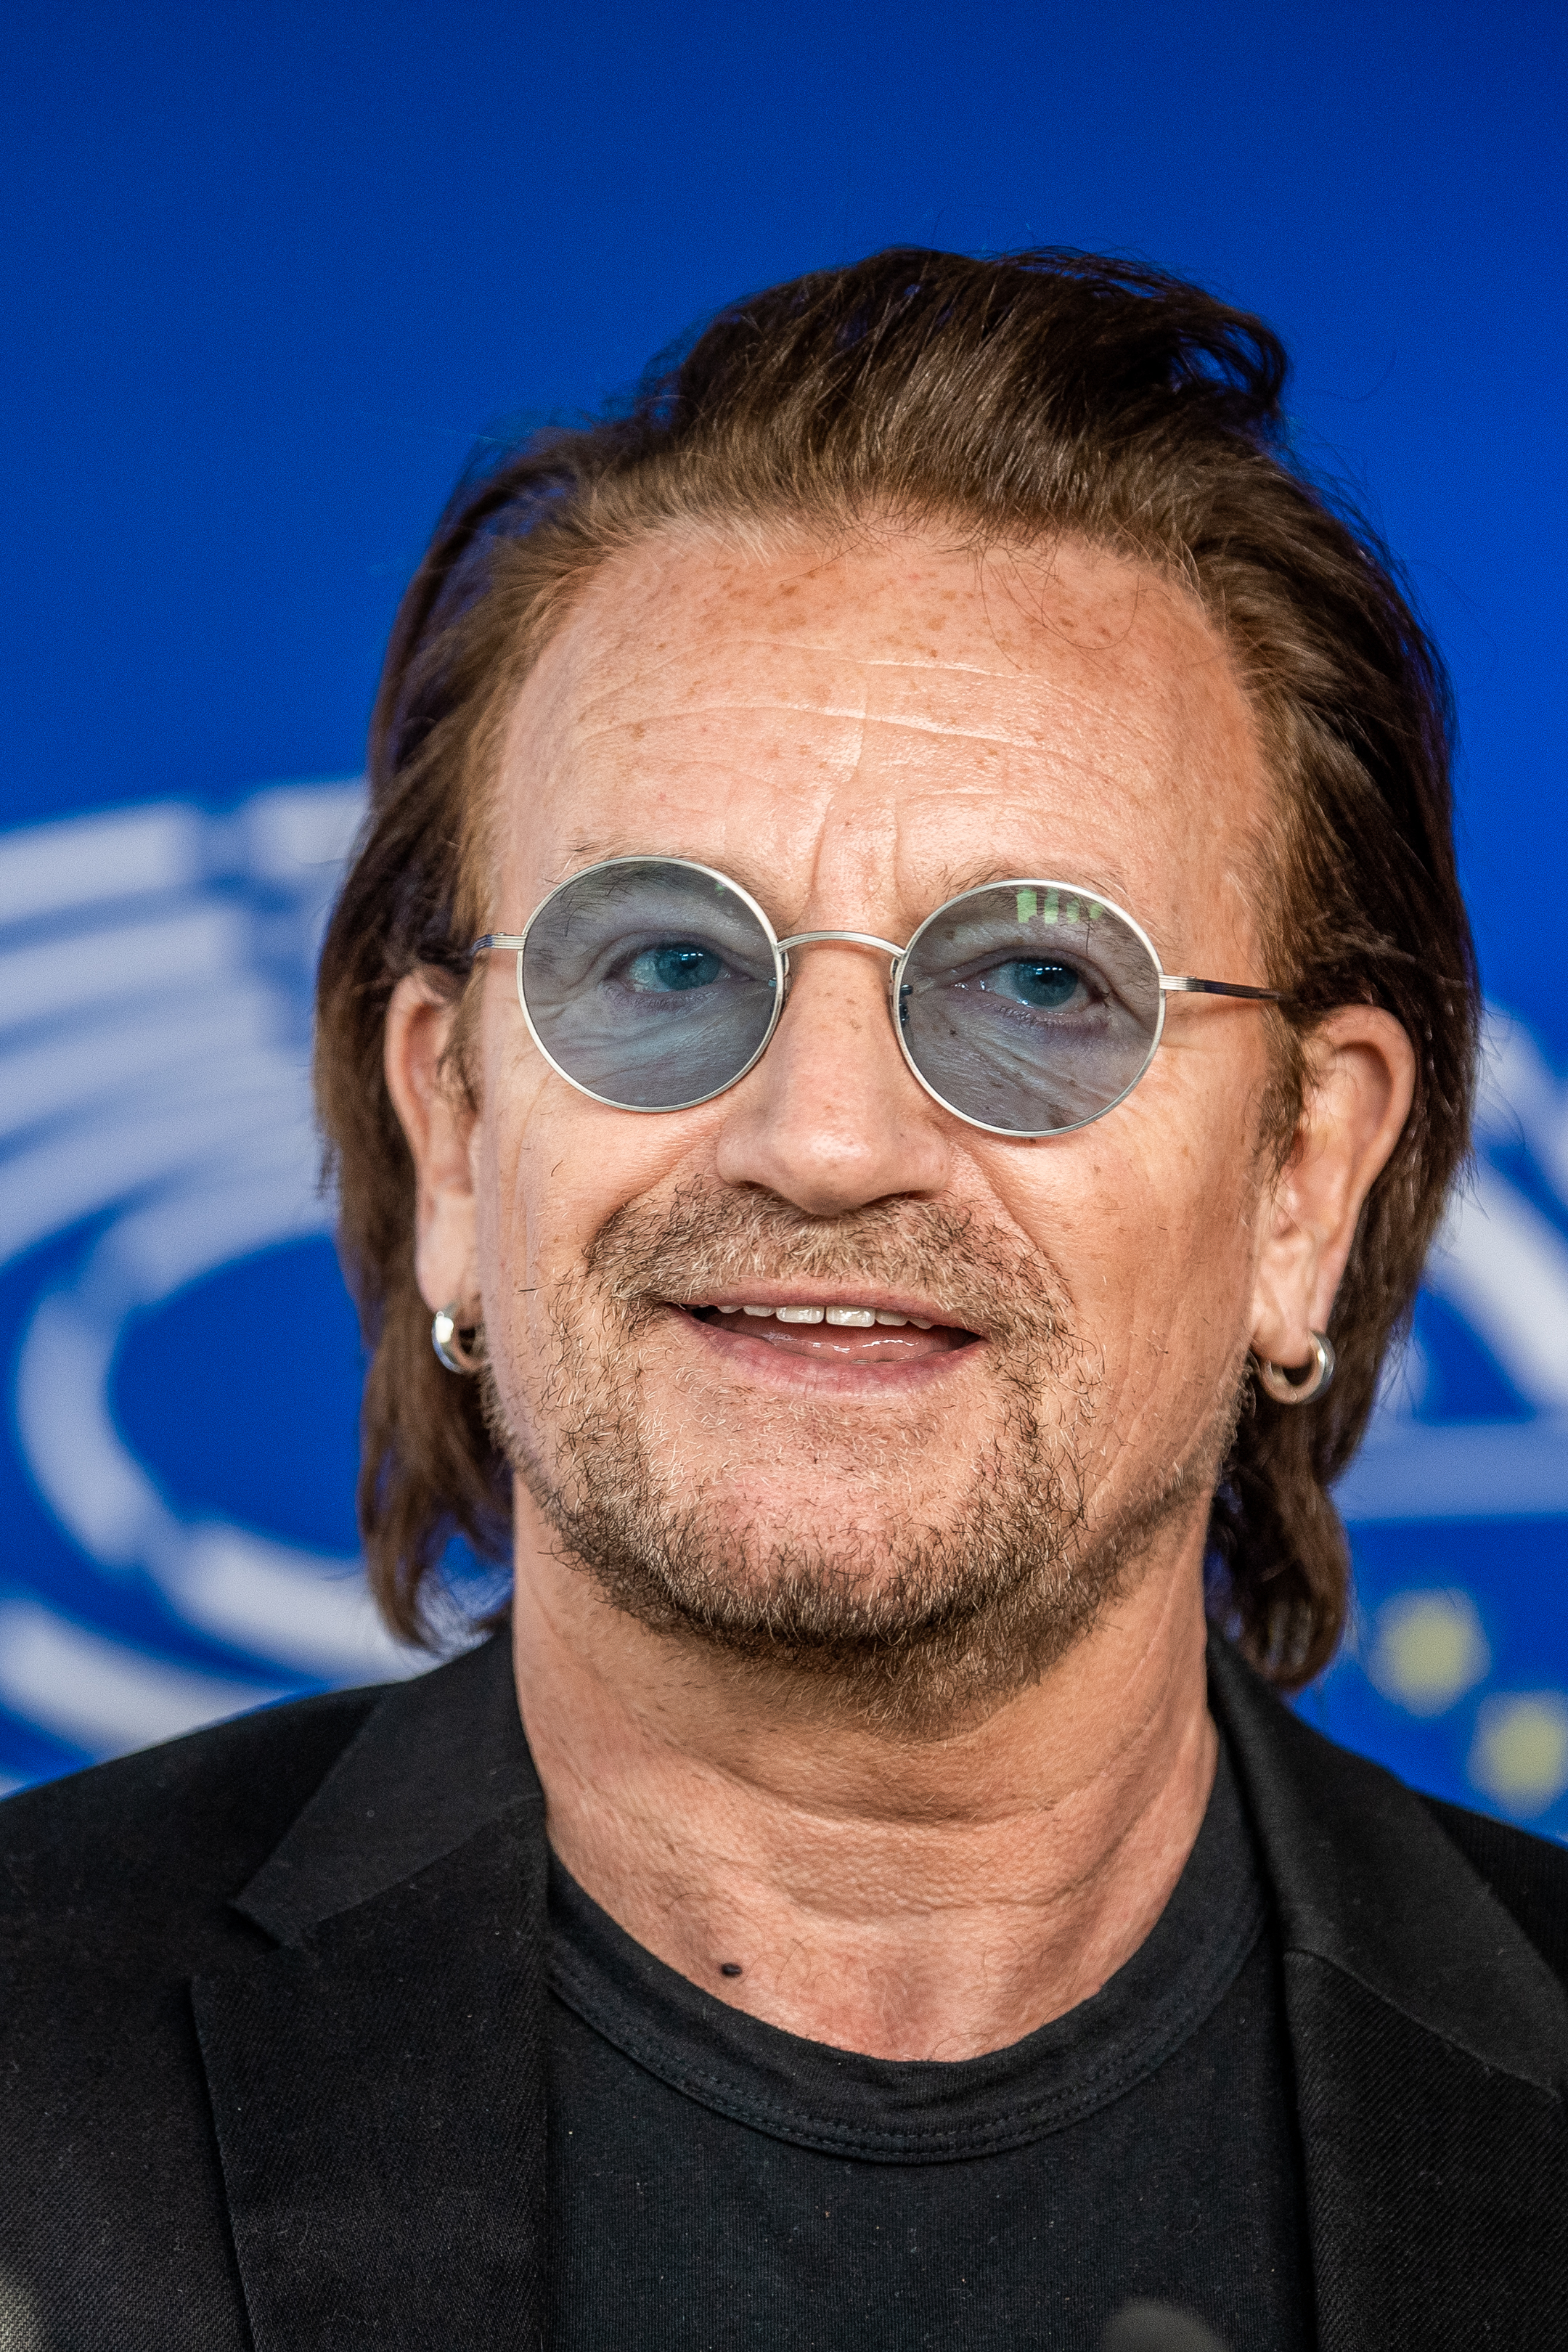 Brussels , 10/10/2018
Bono Of The Rock Band U2 Visits The European Parliament .
Pix : Bono
Credit : Mathieu Golinvaux / Isopix